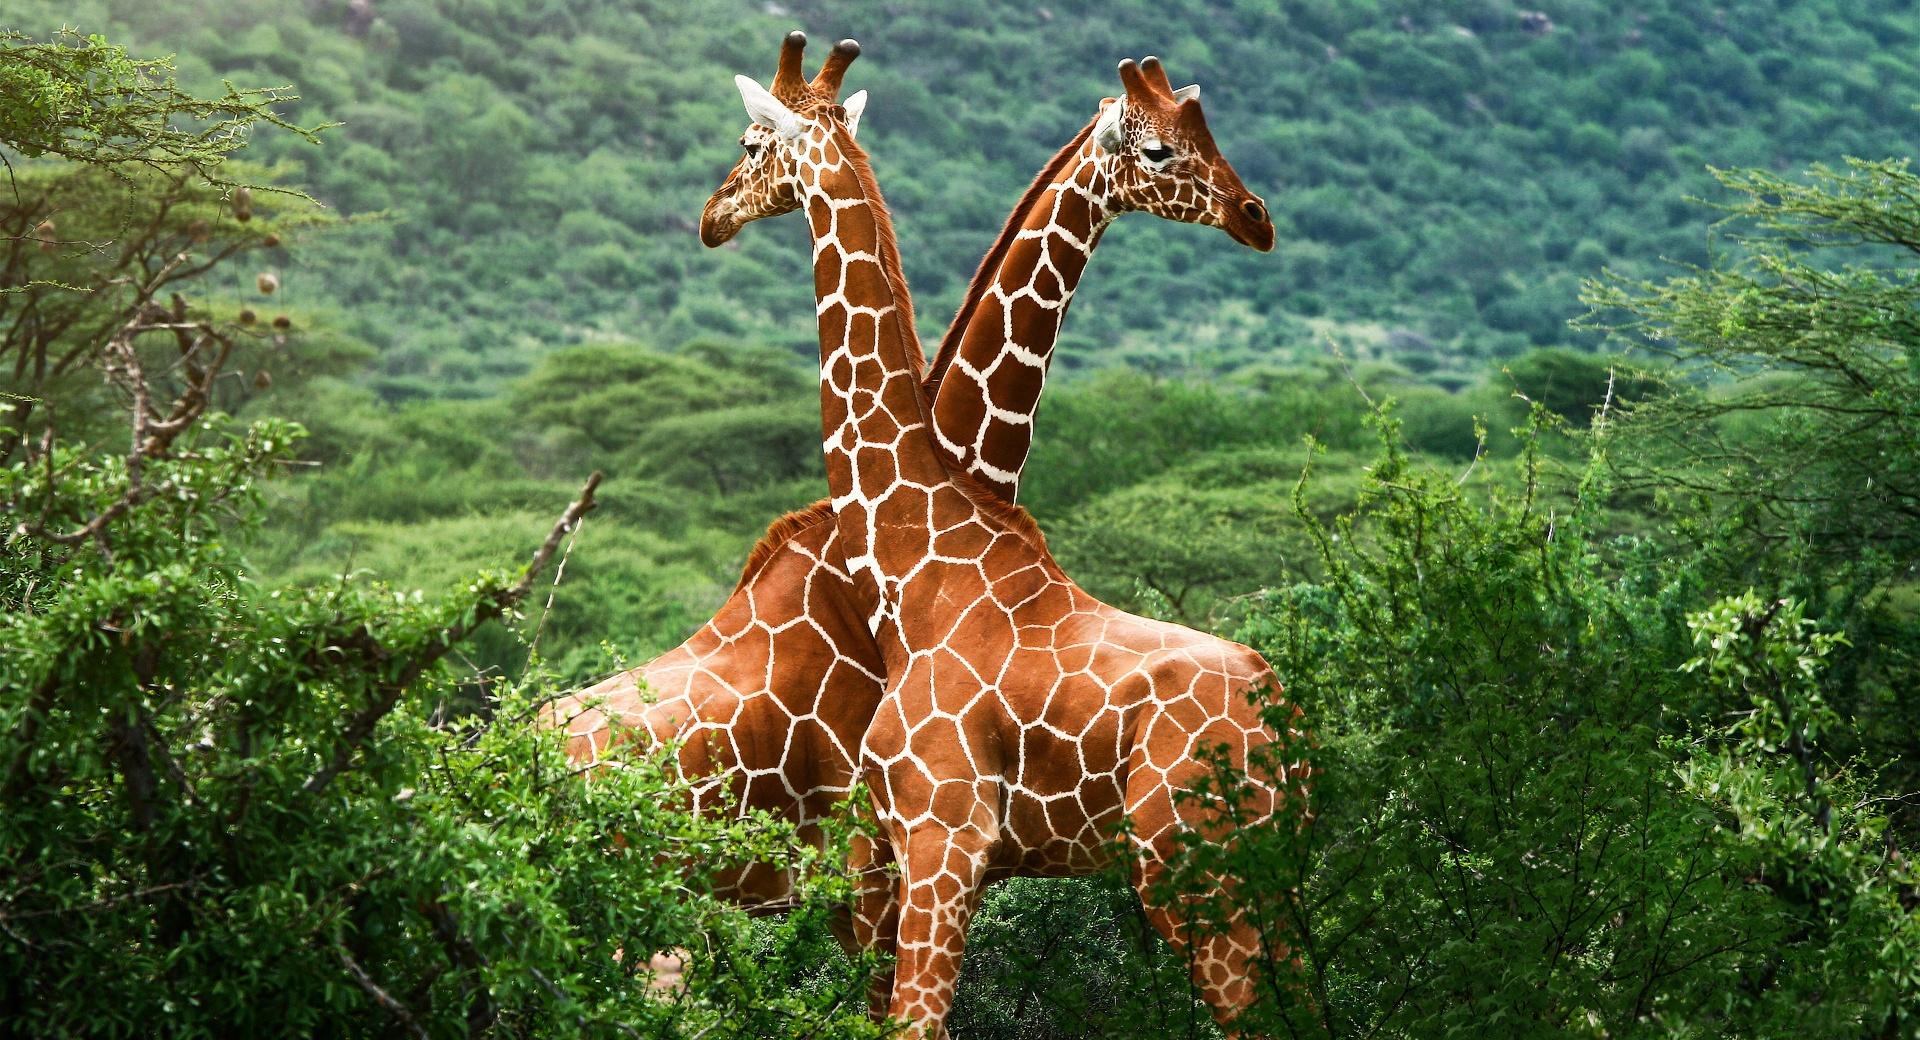 Giraffes, Africa wallpapers HD quality